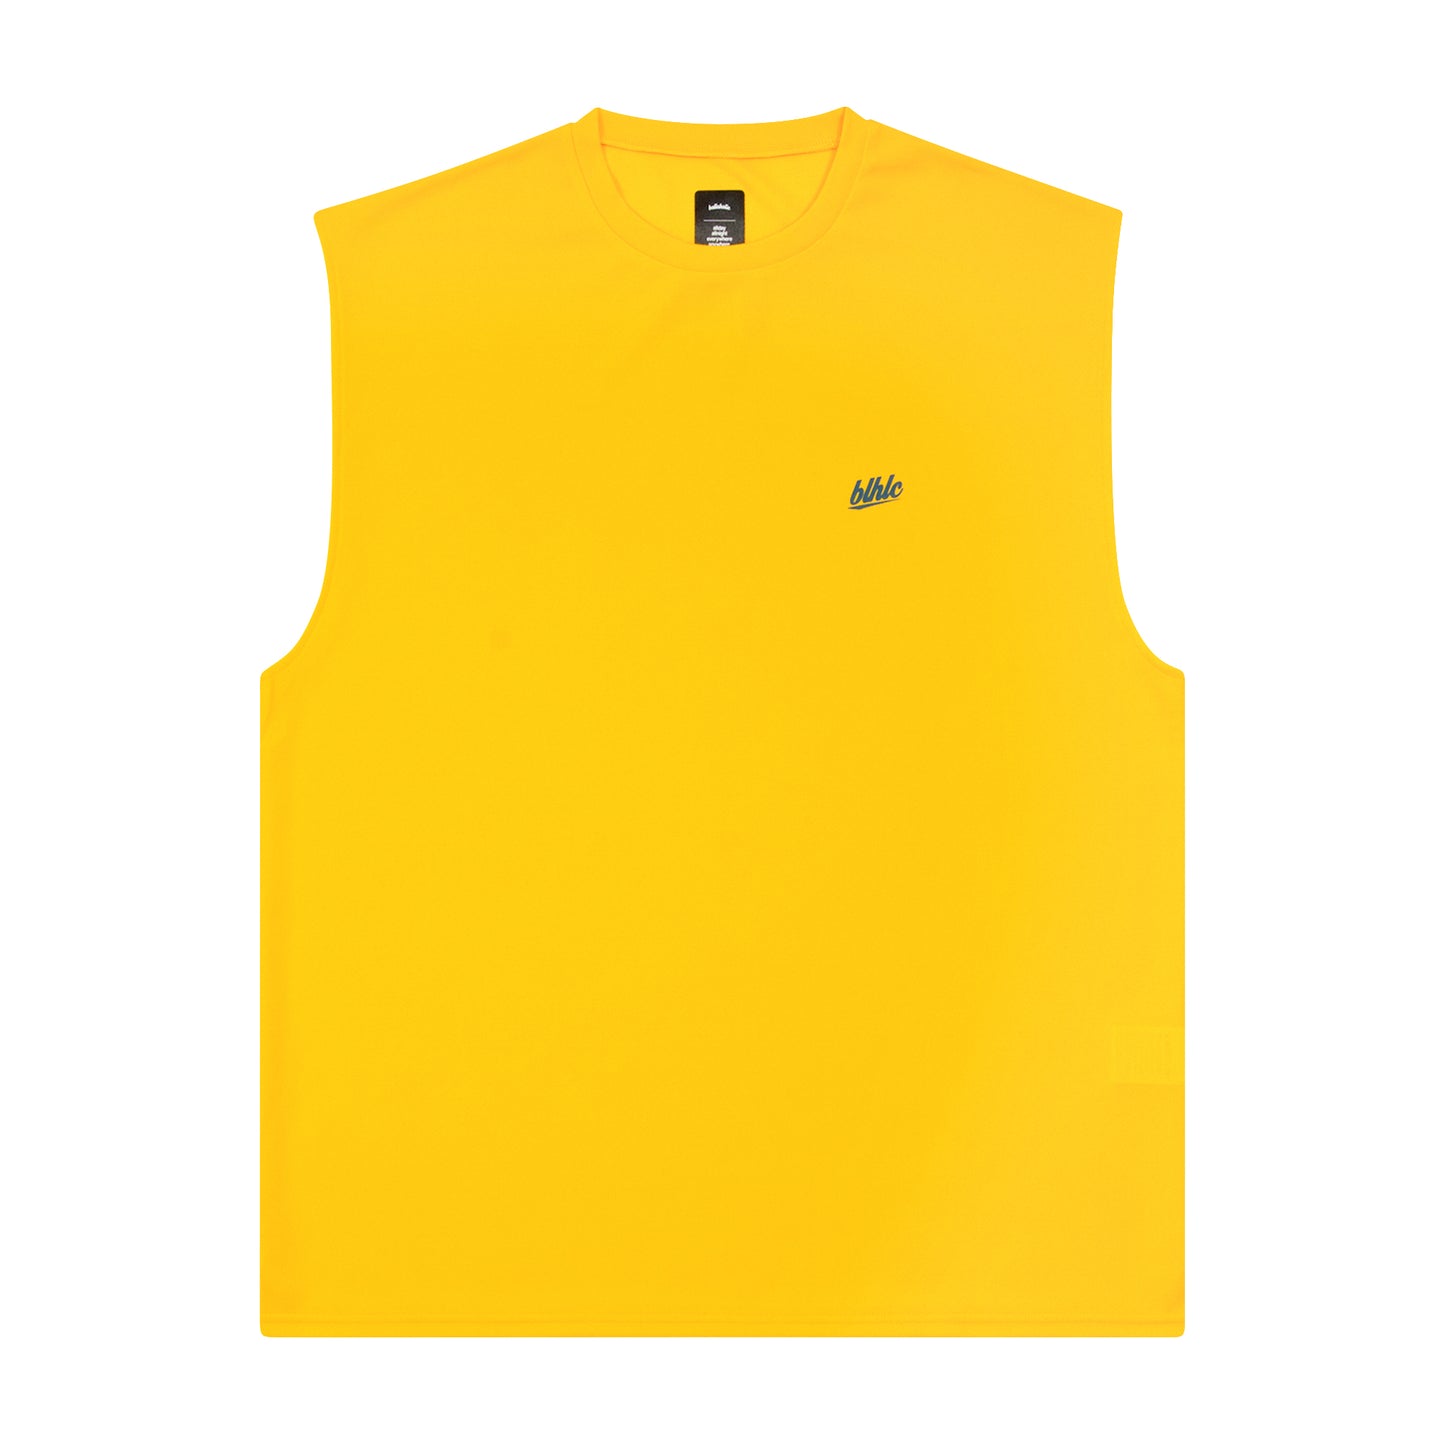 blhlc Back Print No Sleeve Tops (yellow/marine digital camo)